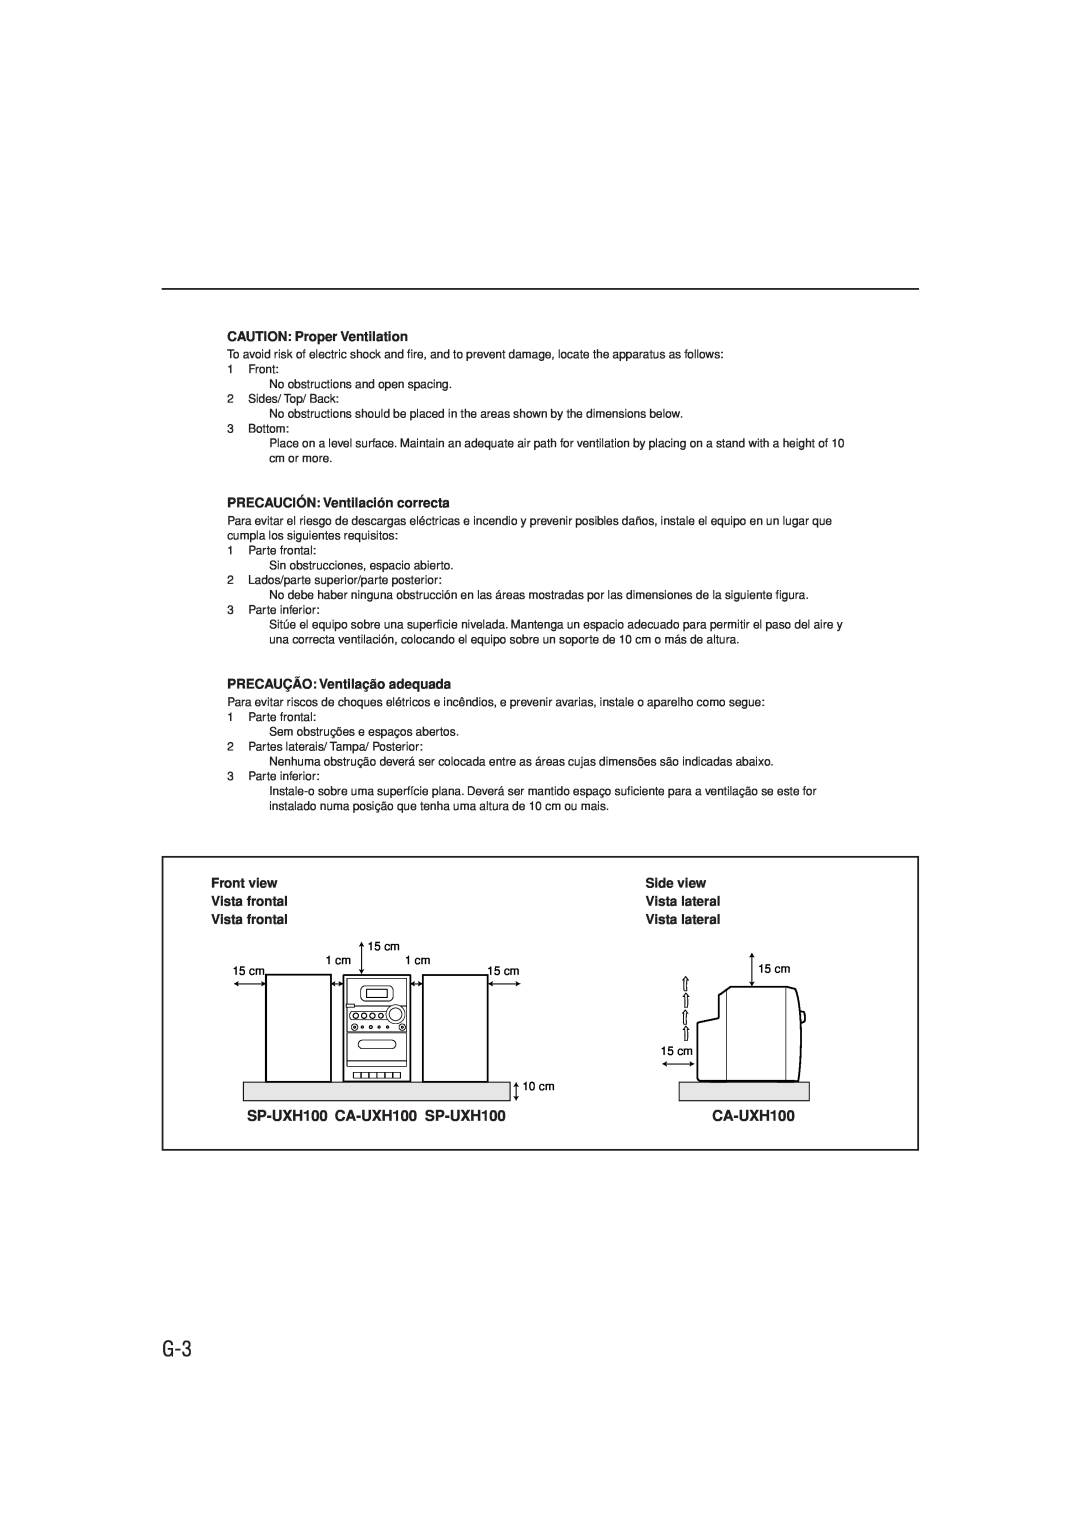 JVC UX-H100 manual SP-UXH100 CA-UXH100 SP-UXH100, CAUTION: Proper Ventilation, PRECAUCIÓN: Ventilación correcta 